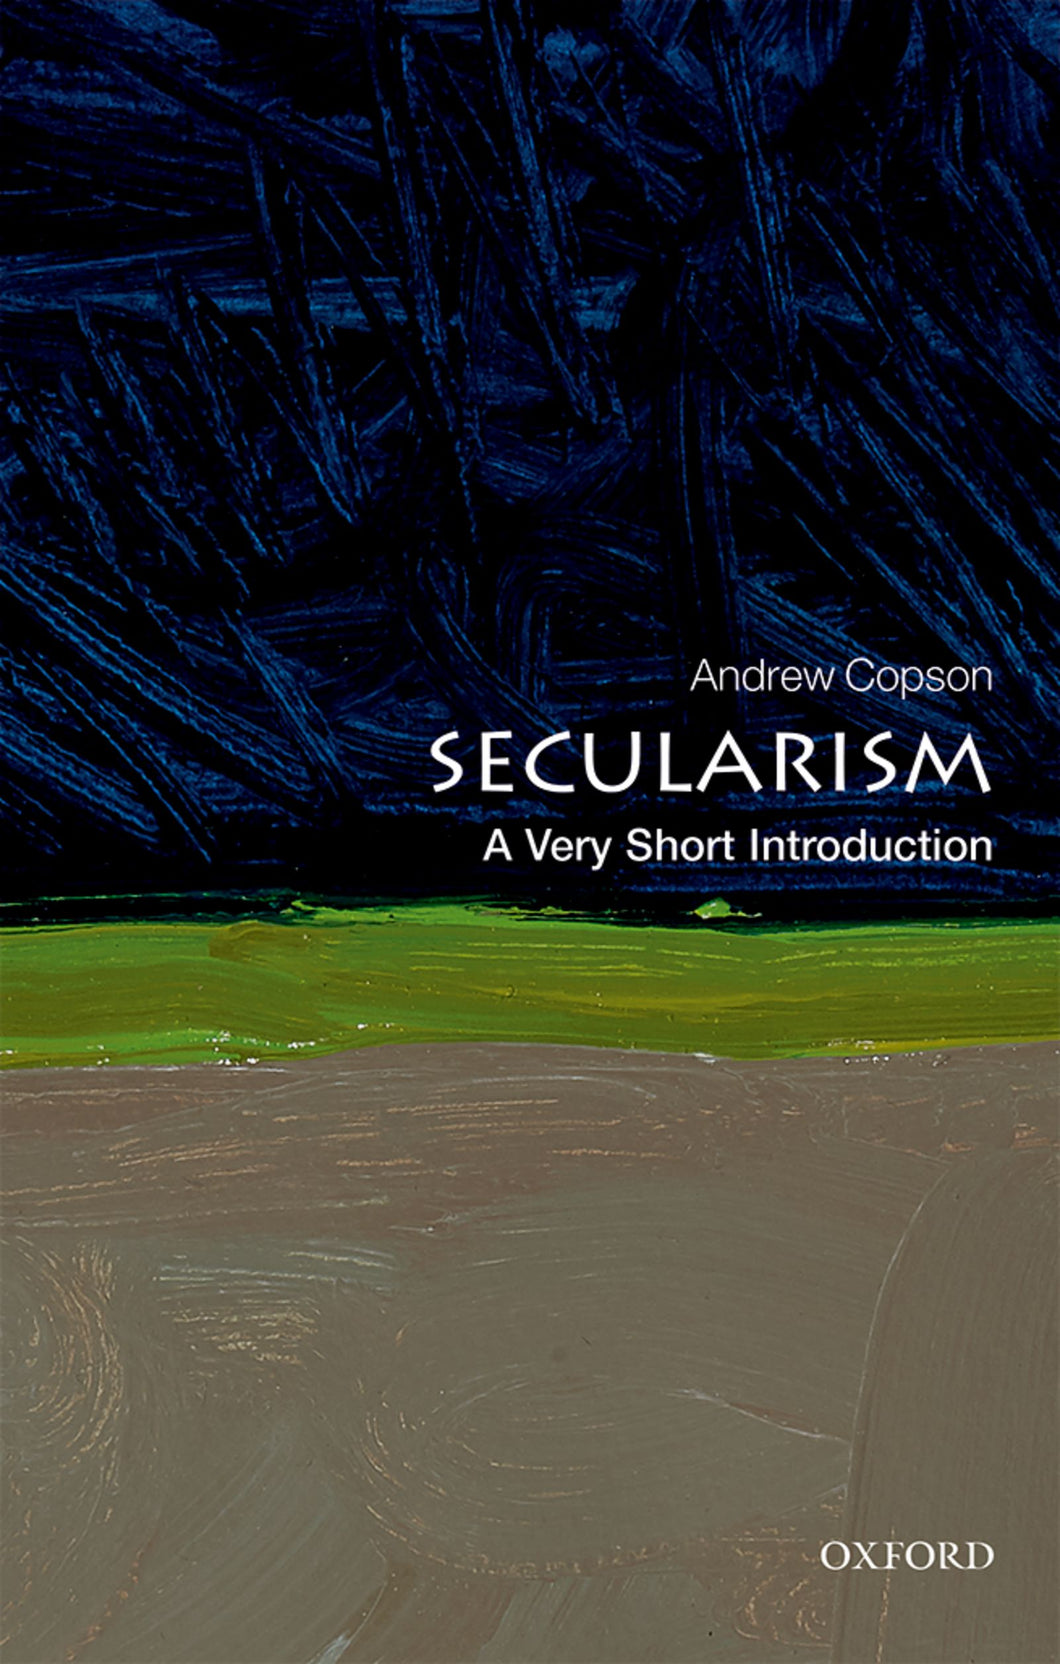 Secularism: A Very Short Introduction ร้านหนังสือและสิ่งของ เป็นร้านหนังสือภาษาอังกฤษหายาก และร้านกาแฟ หรือ บุ๊คคาเฟ่ ตั้งอยู่สุขุมวิท กรุงเทพ